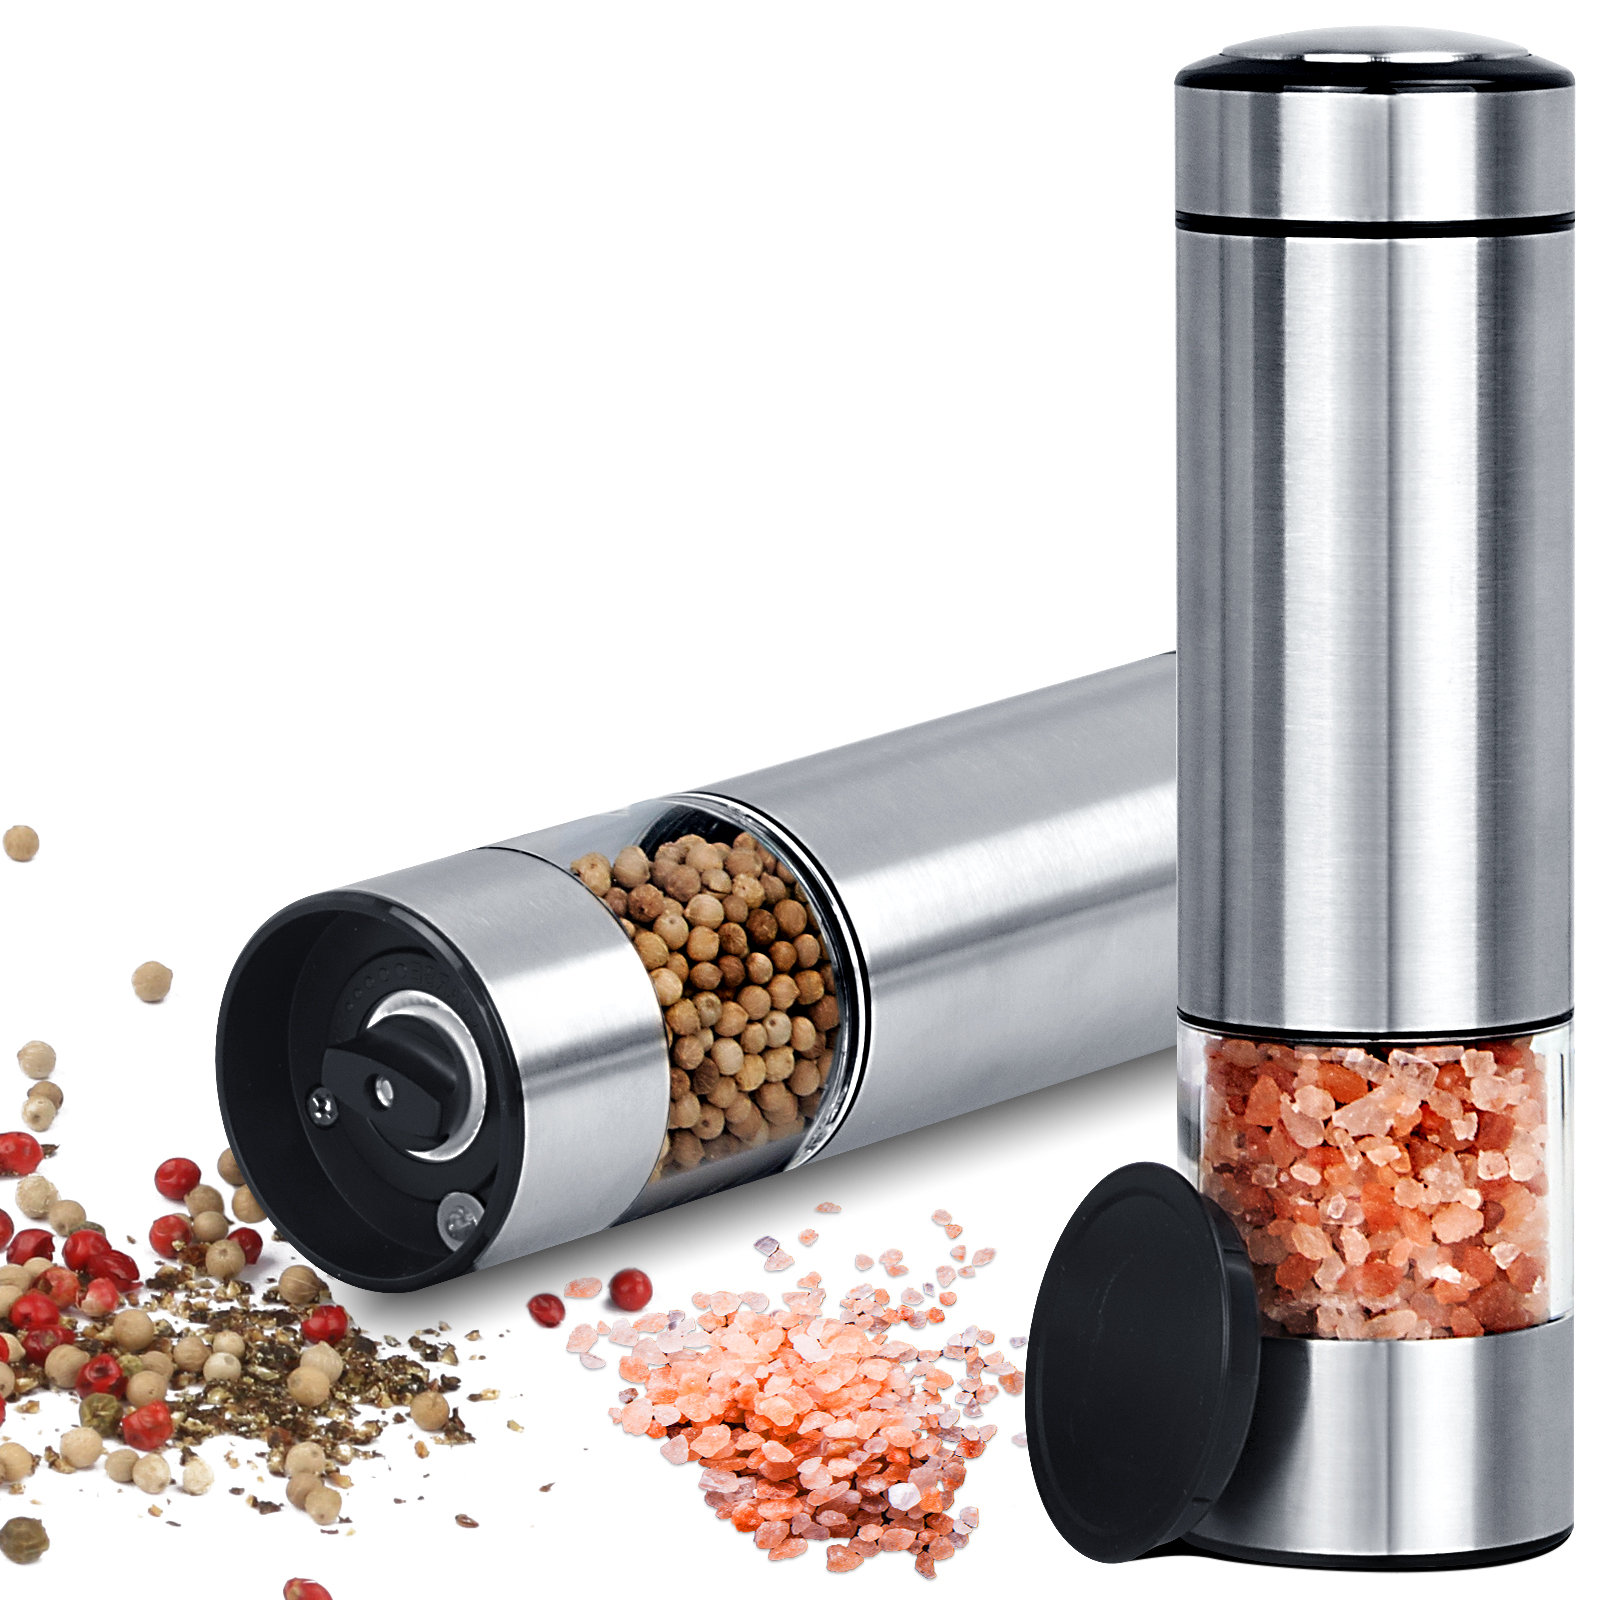 Genkent Electric Gravity Salt Pepper Grinder Battery Operated